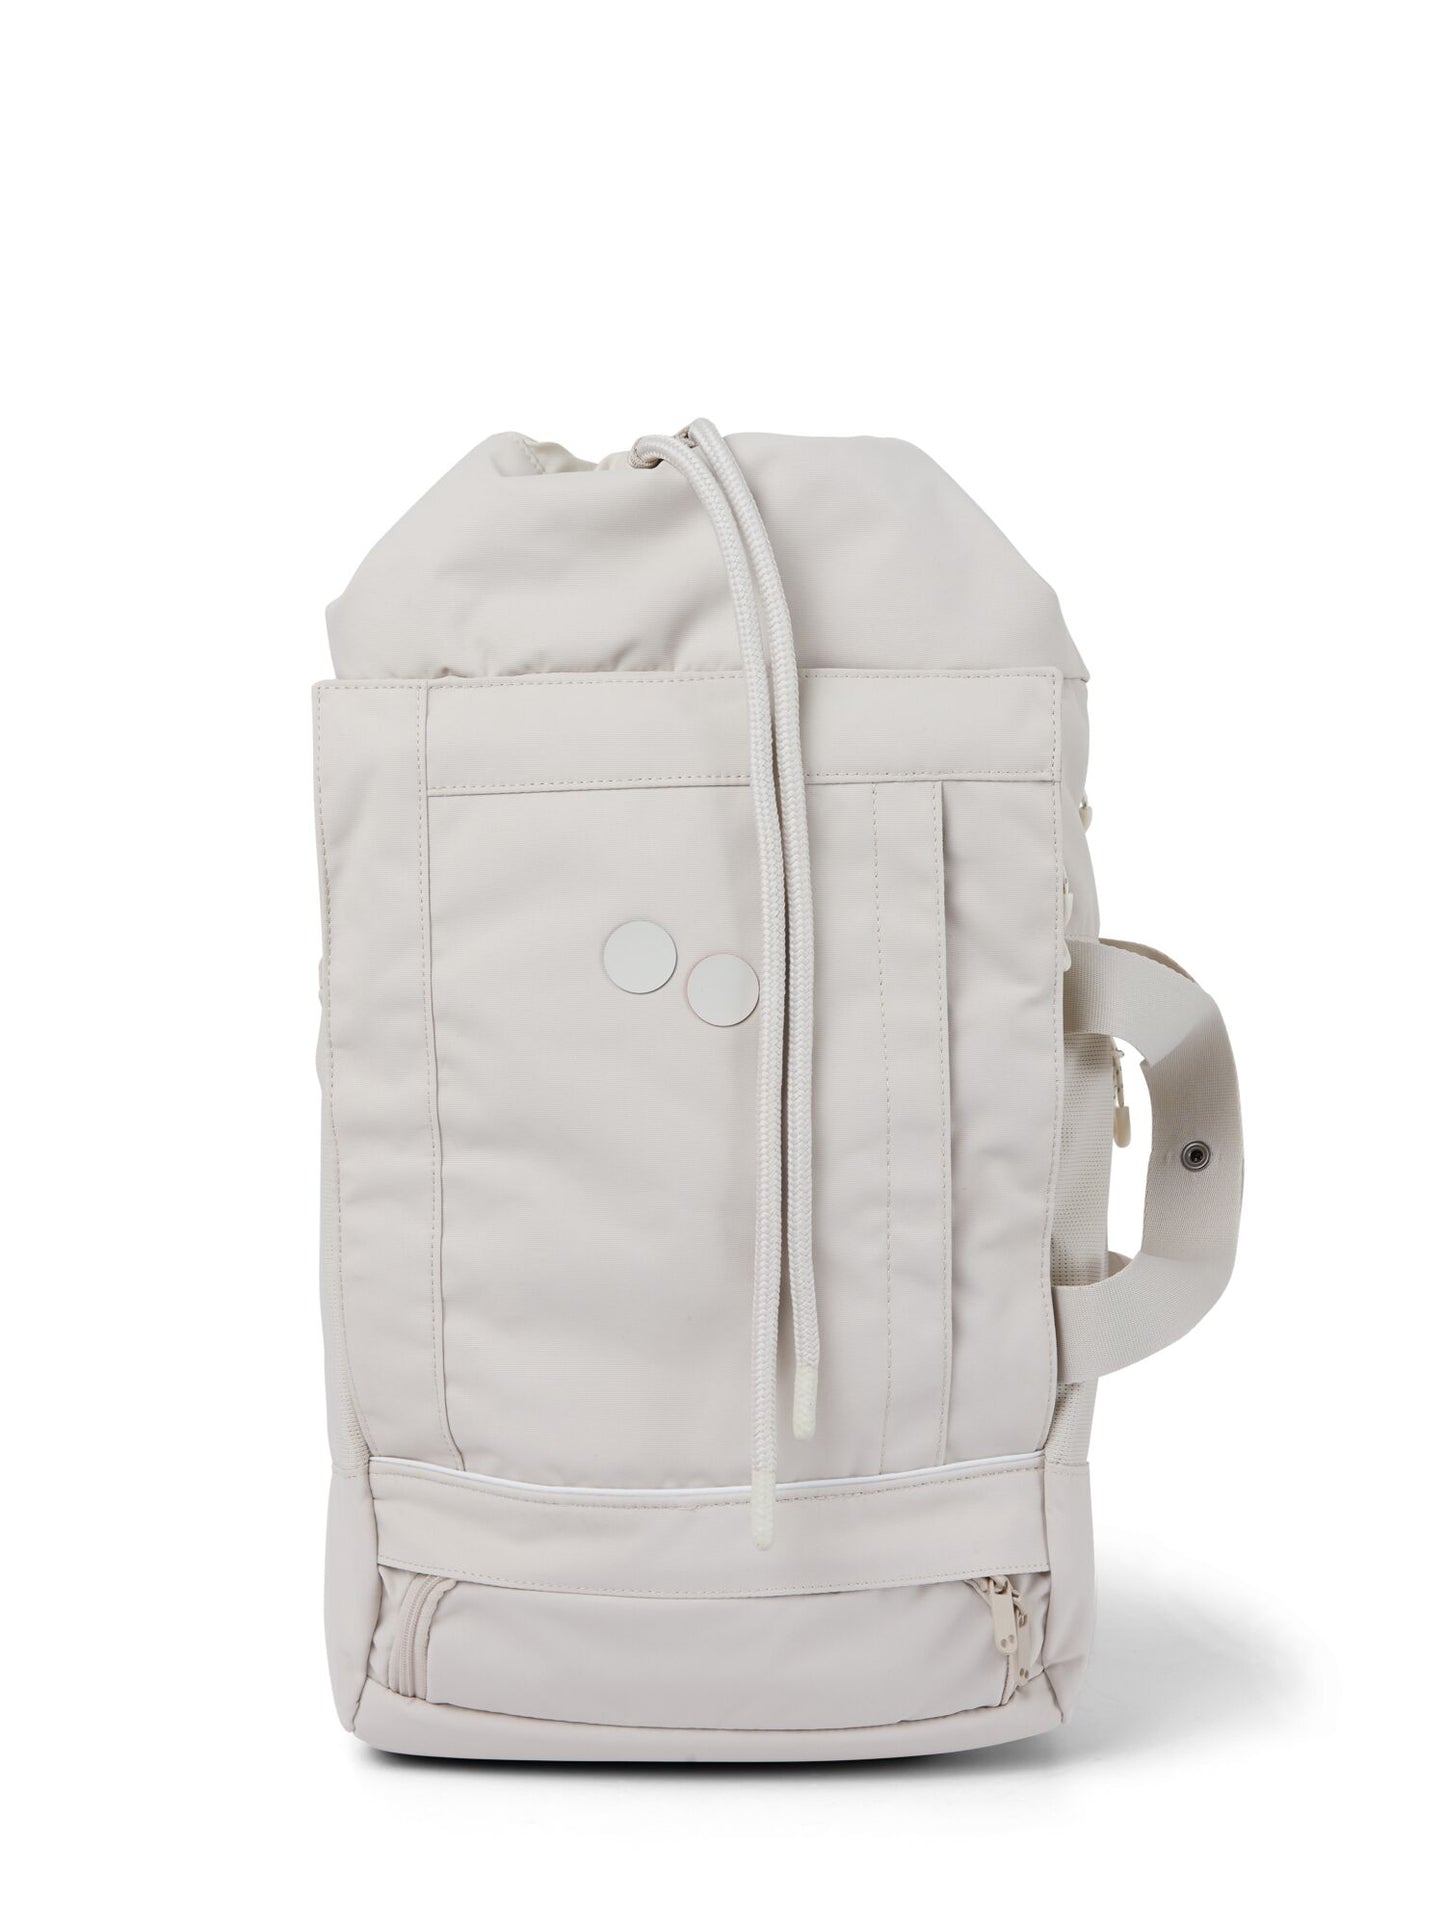 pinqponq-backpack-Blok-Medium-Cliff-Beige-front